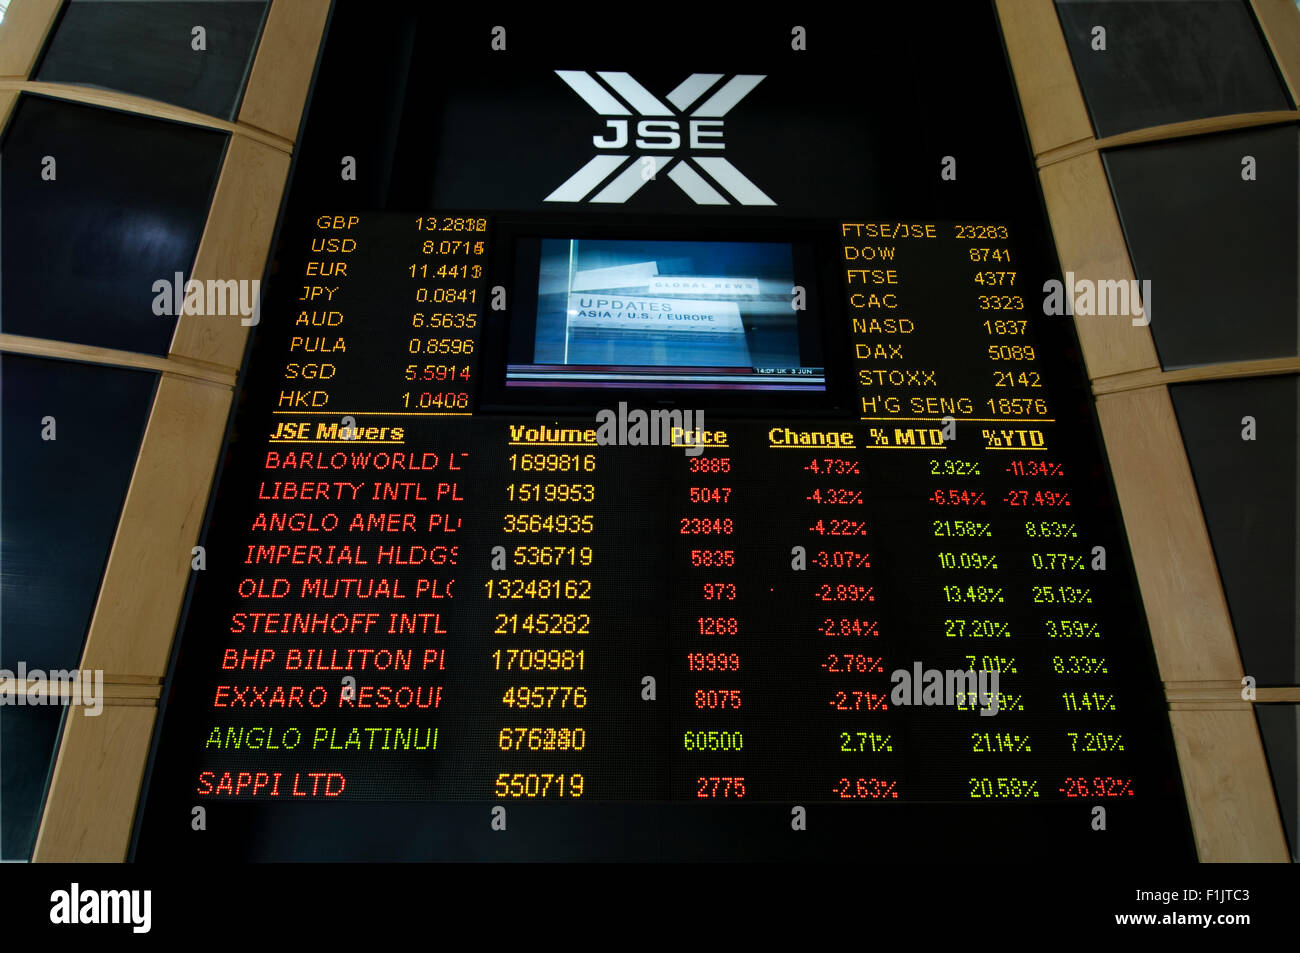 JSE trading board Stock Photo: 87080787 - Alamy